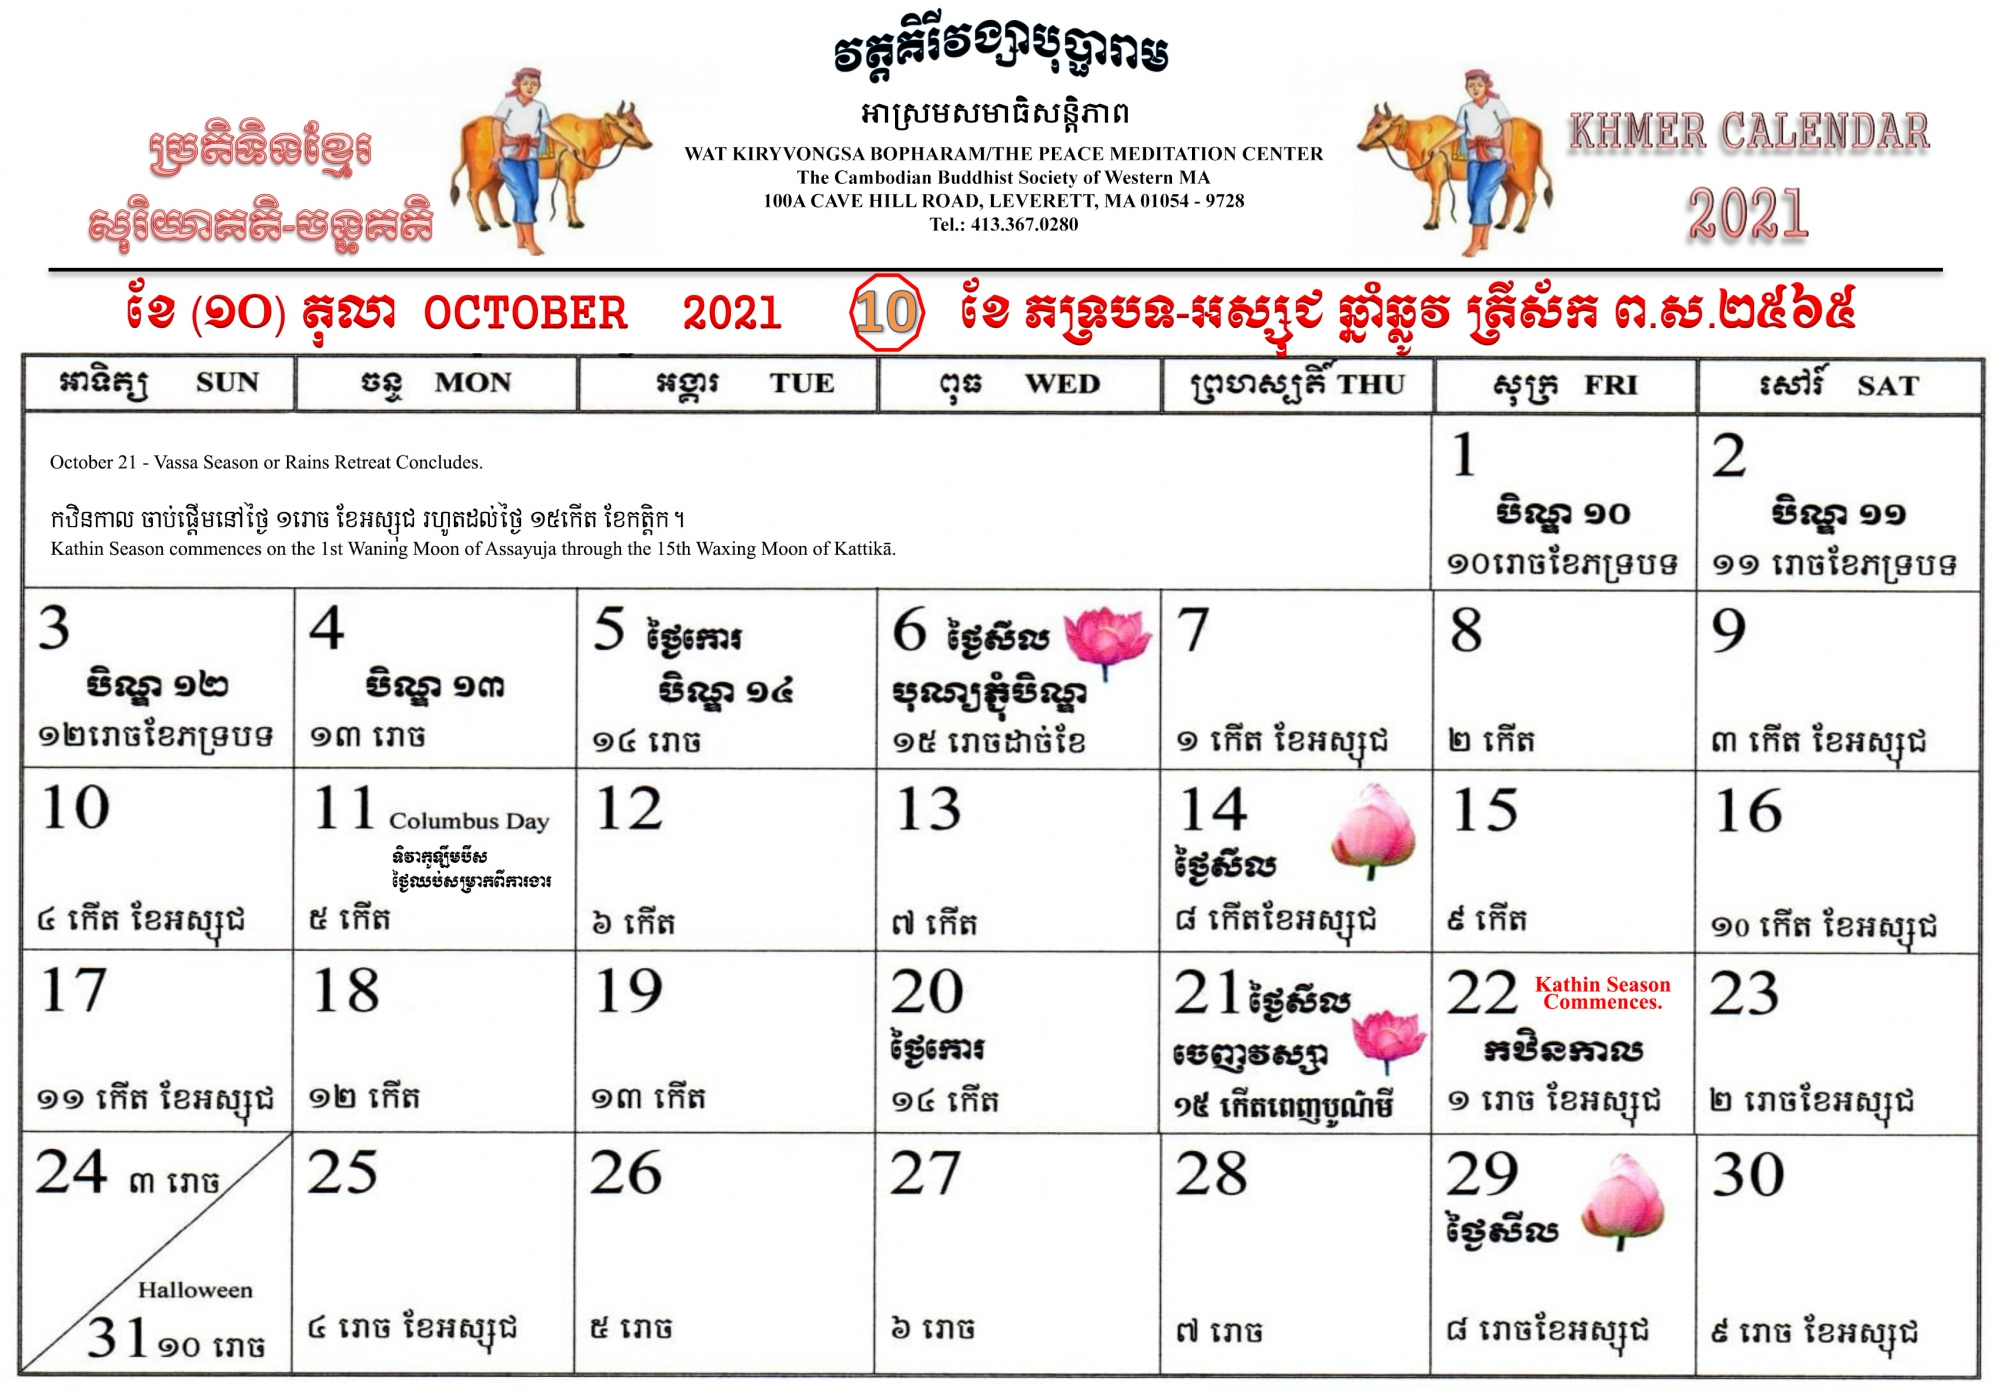 Free Copy: The 2565 2021 Khmer Calendar - Templenews December 2021 Calendar Youtube